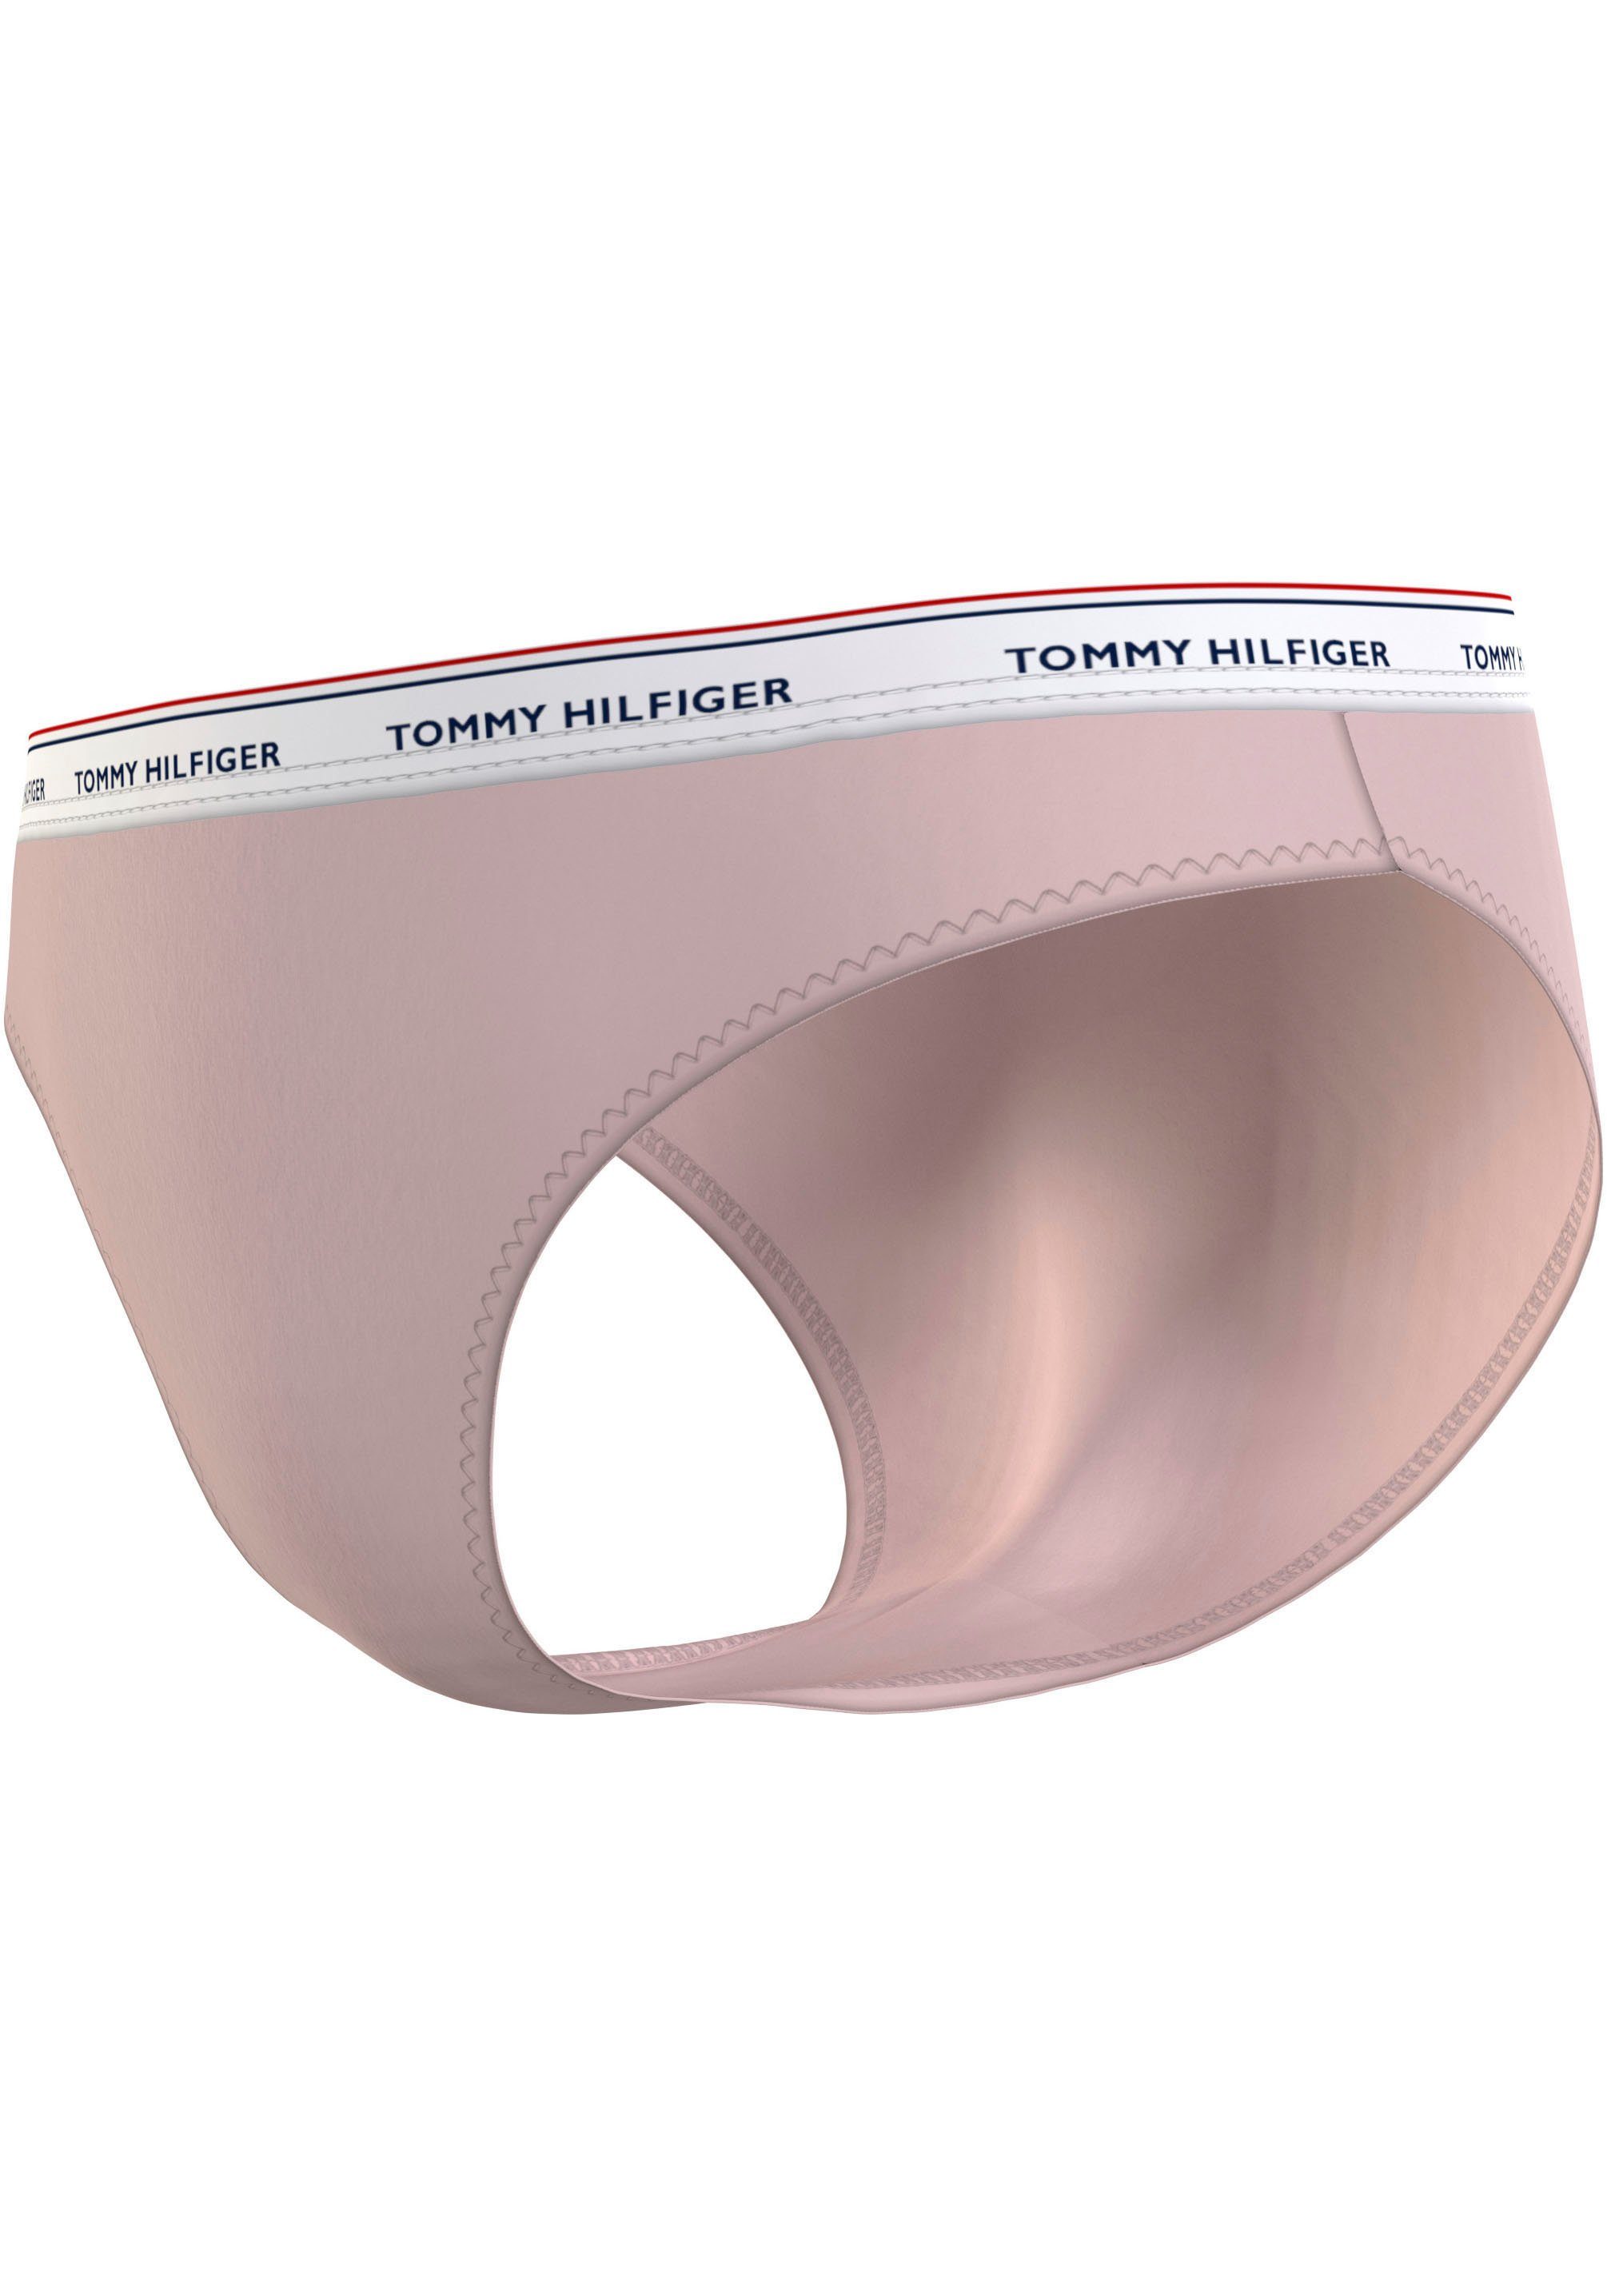 Tommy Hilfiger Underwear Bikinibroekje 3 PACK BIKINI (EXT SIZES) met tommy hilfiger logoband (Set van 3)